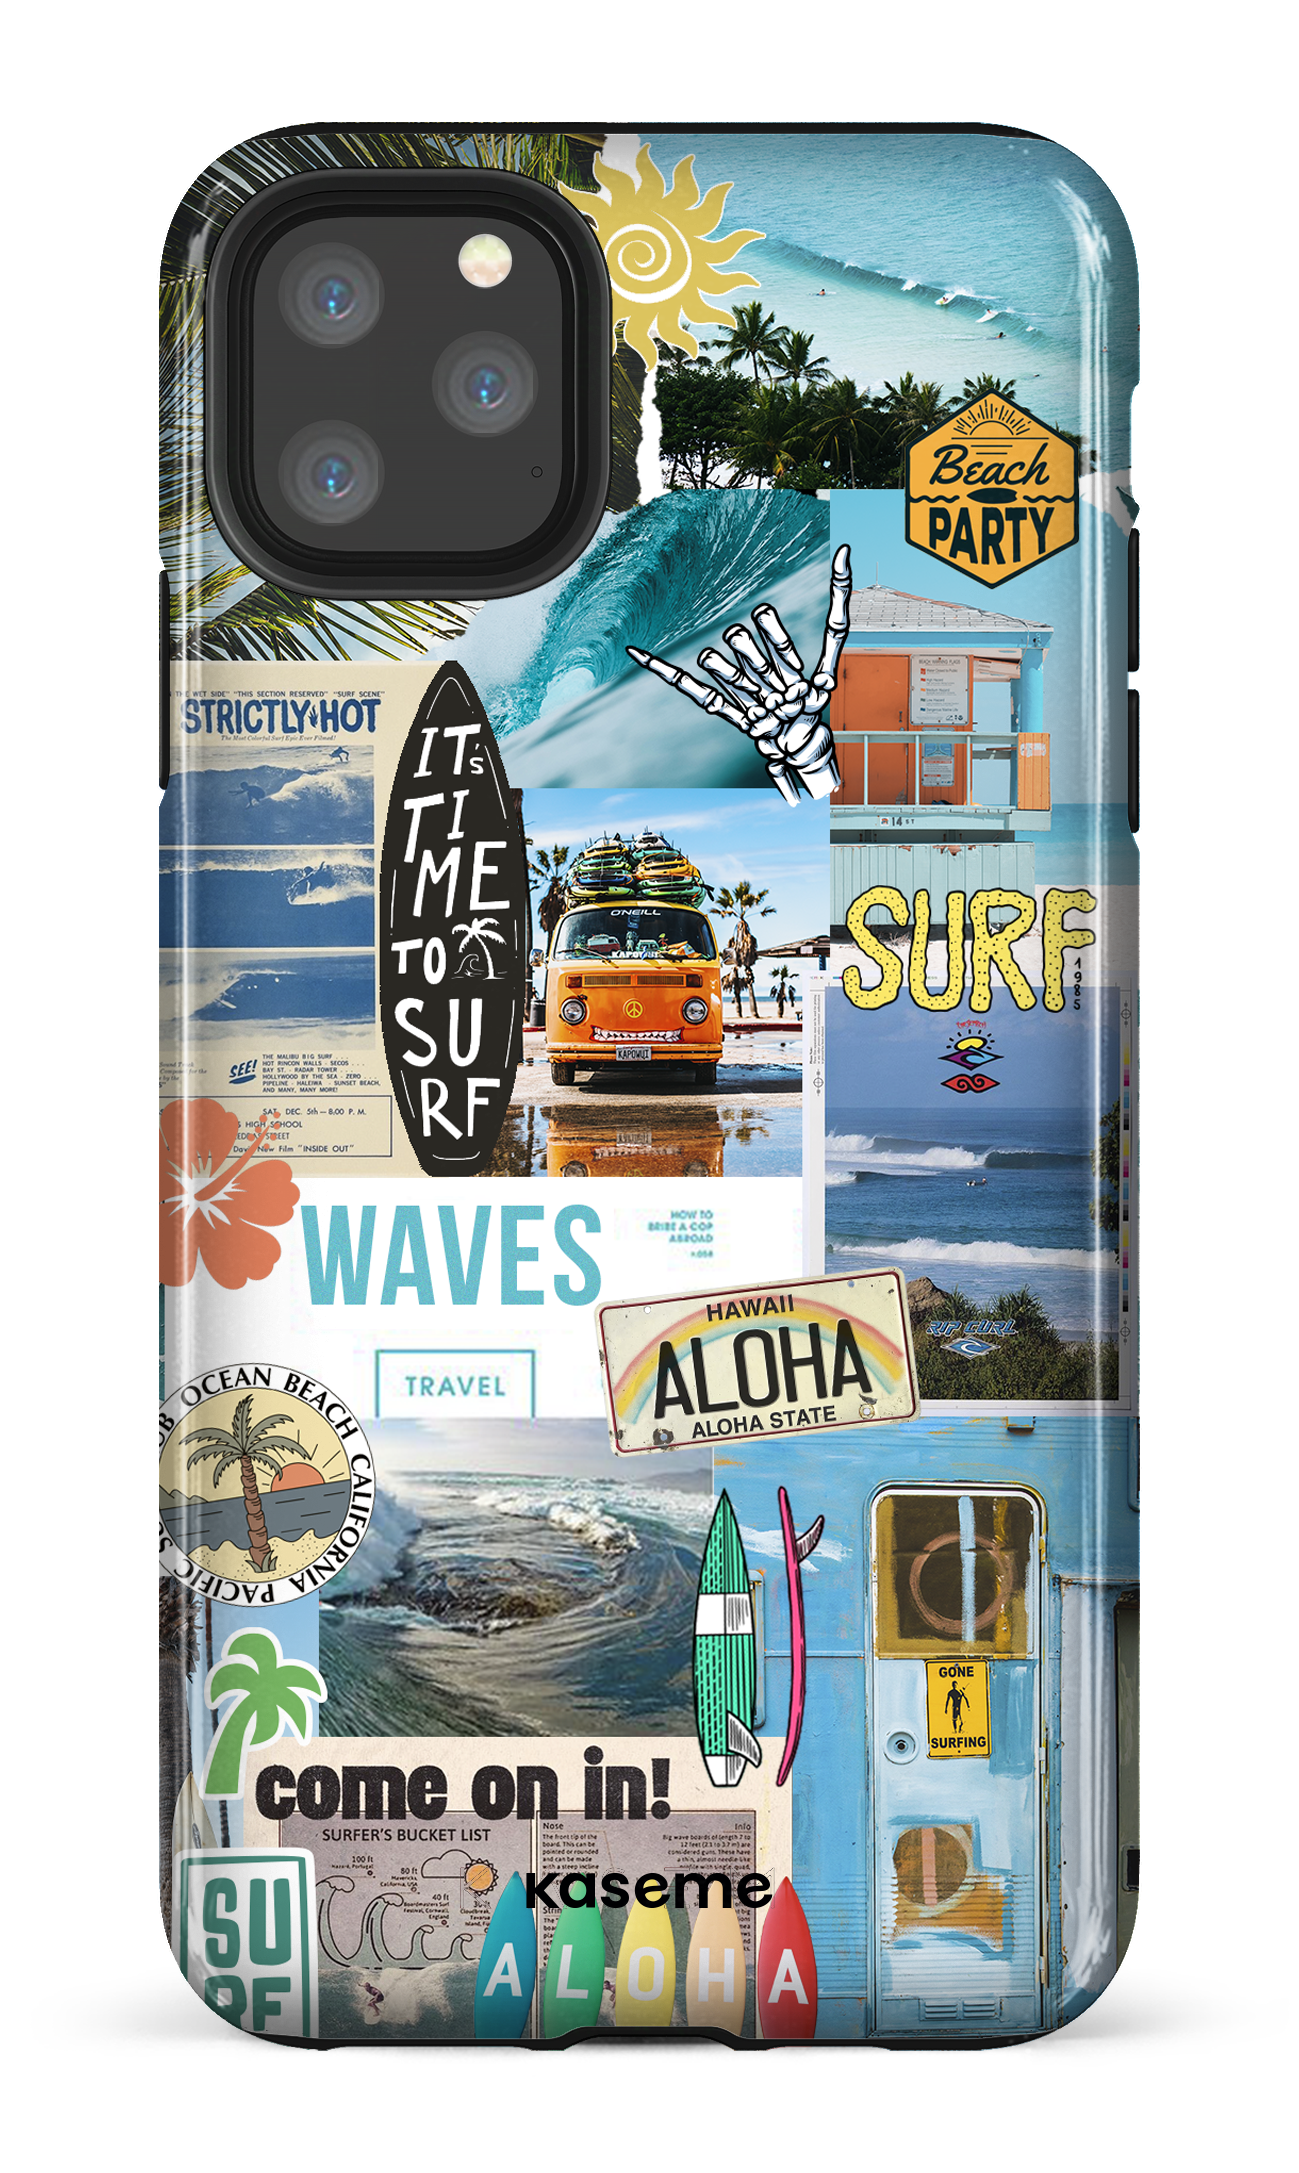 Aloha - iPhone 11 Pro Max